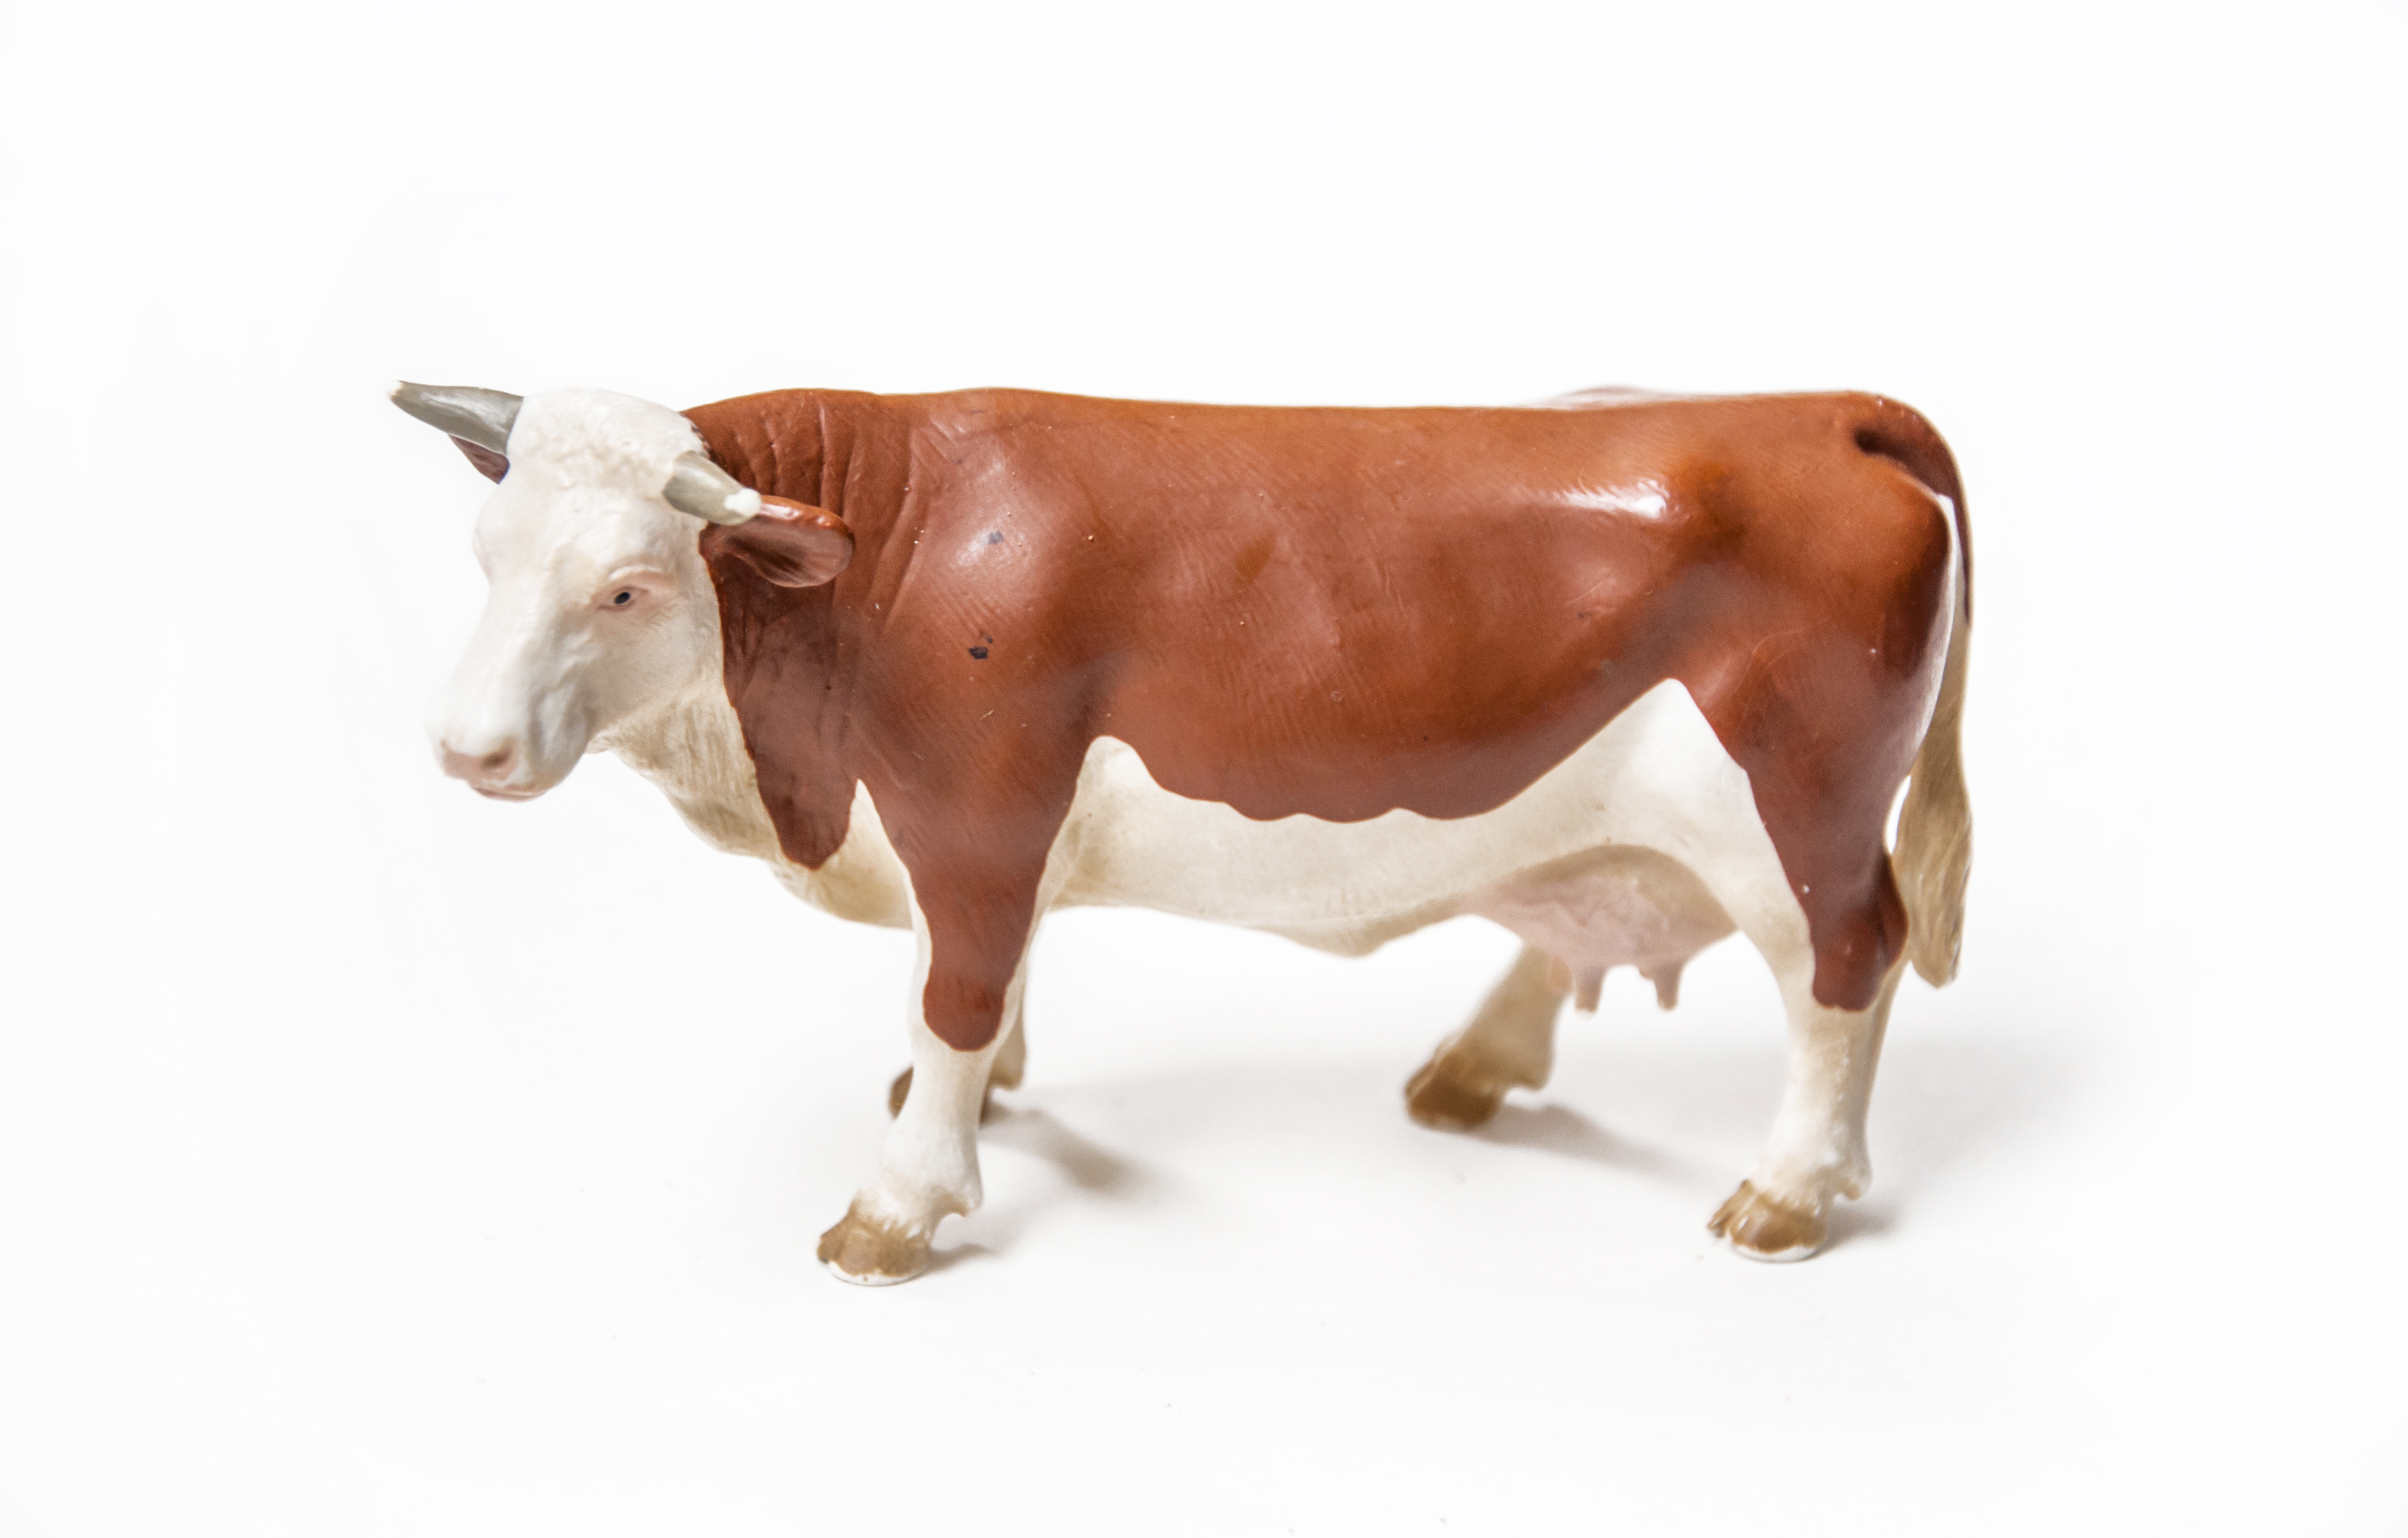 Cow plastic toy statue photo